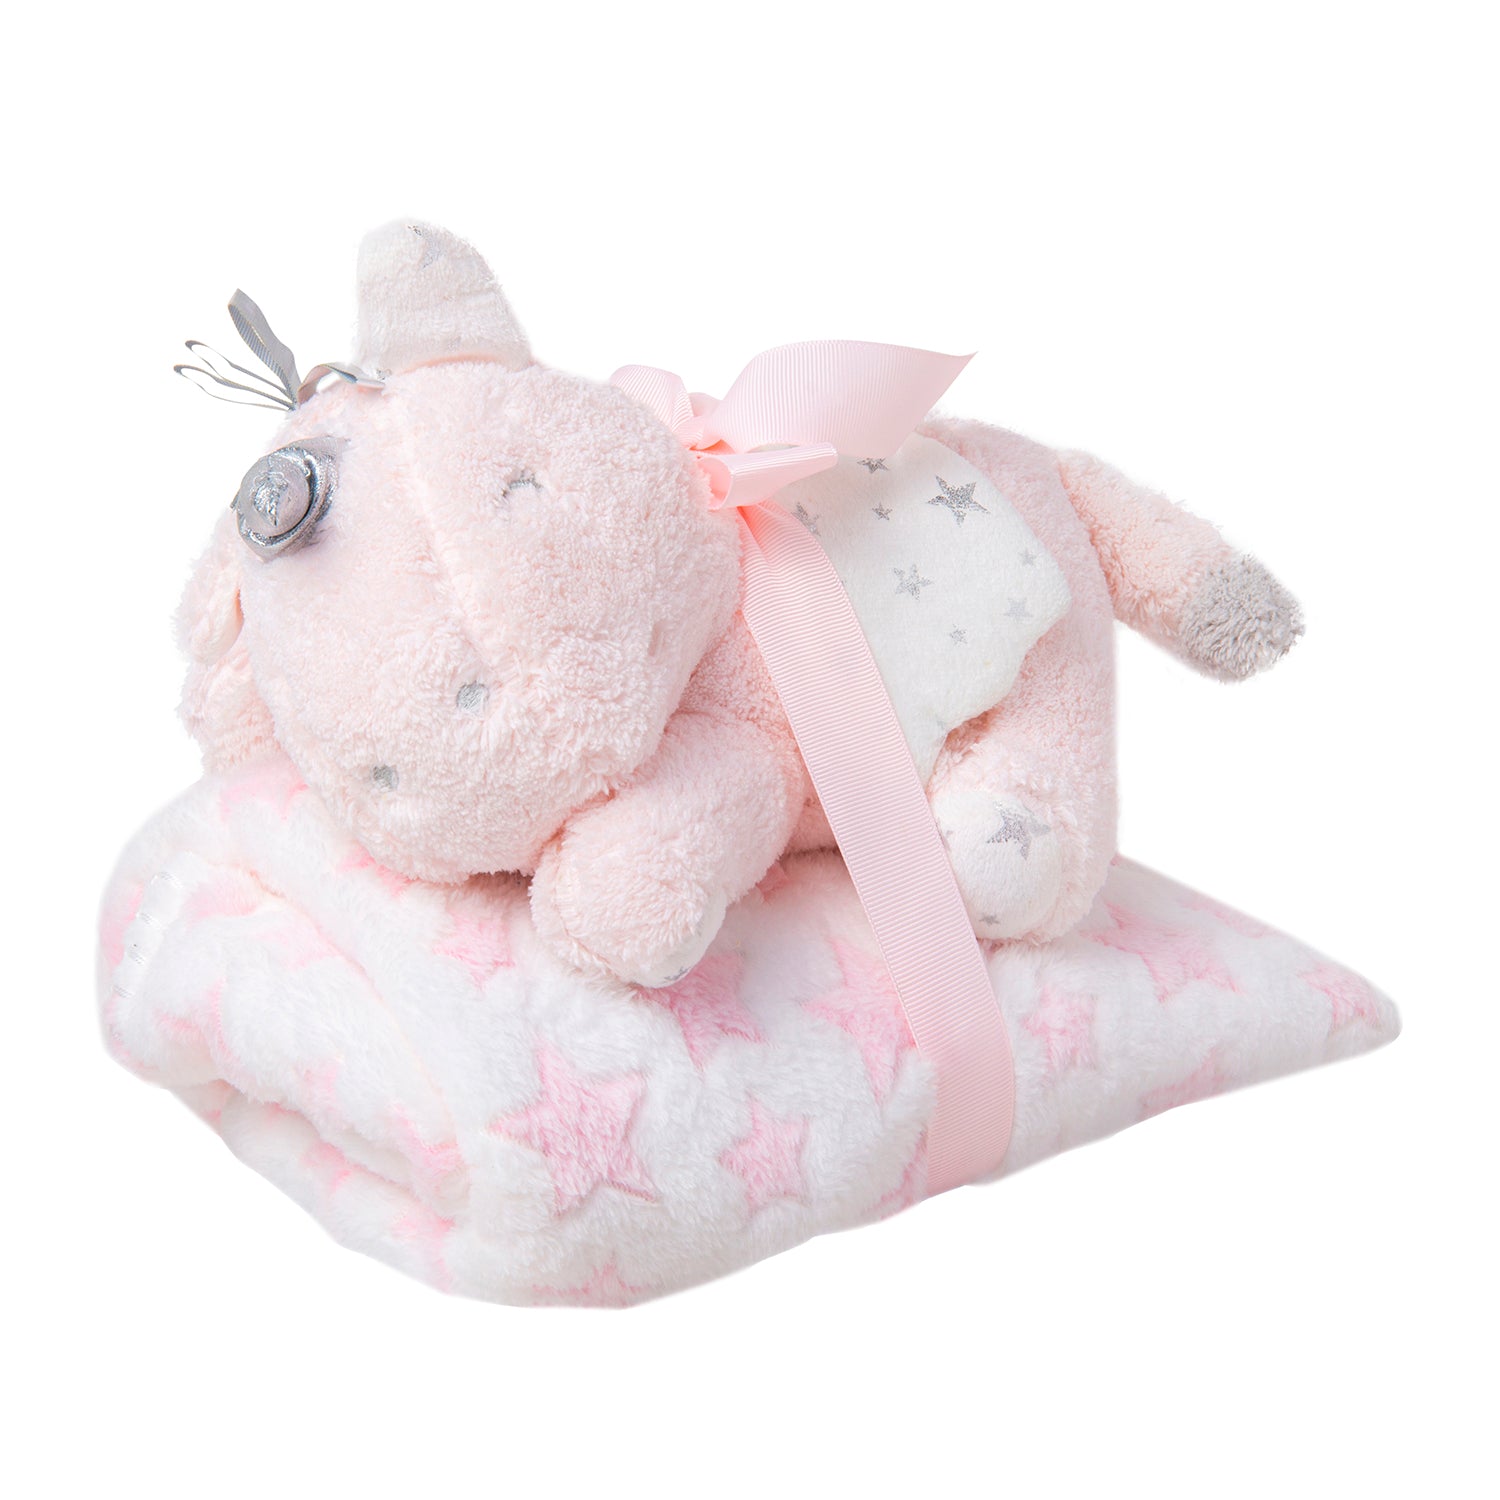 Baby Moo Starry Unicorn Soft Cozy Plush Toy Blanket Pink